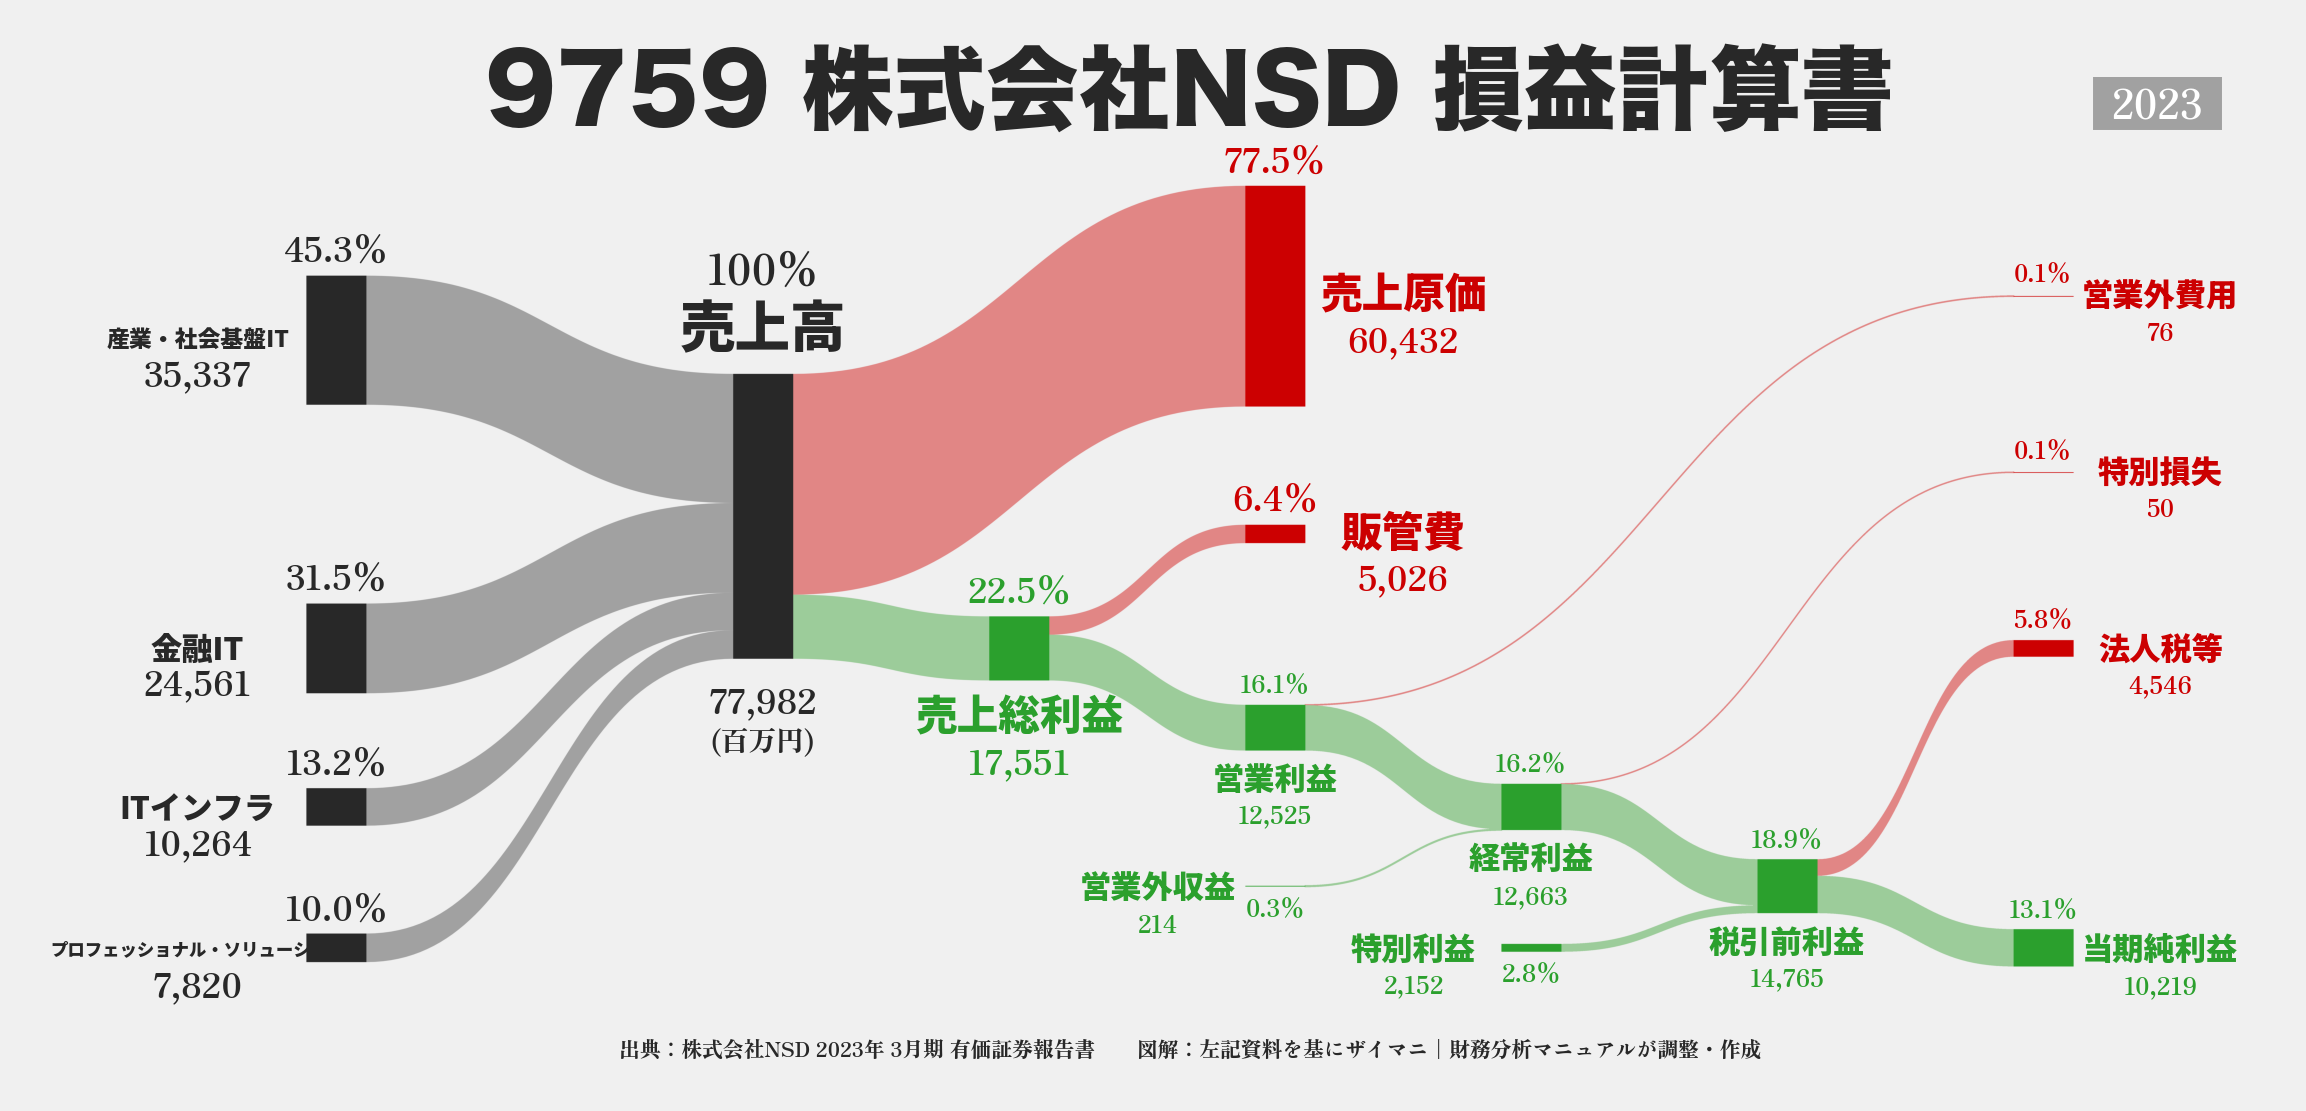 NSD｜9759の損益計算書サンキーダイアグラム図解資料